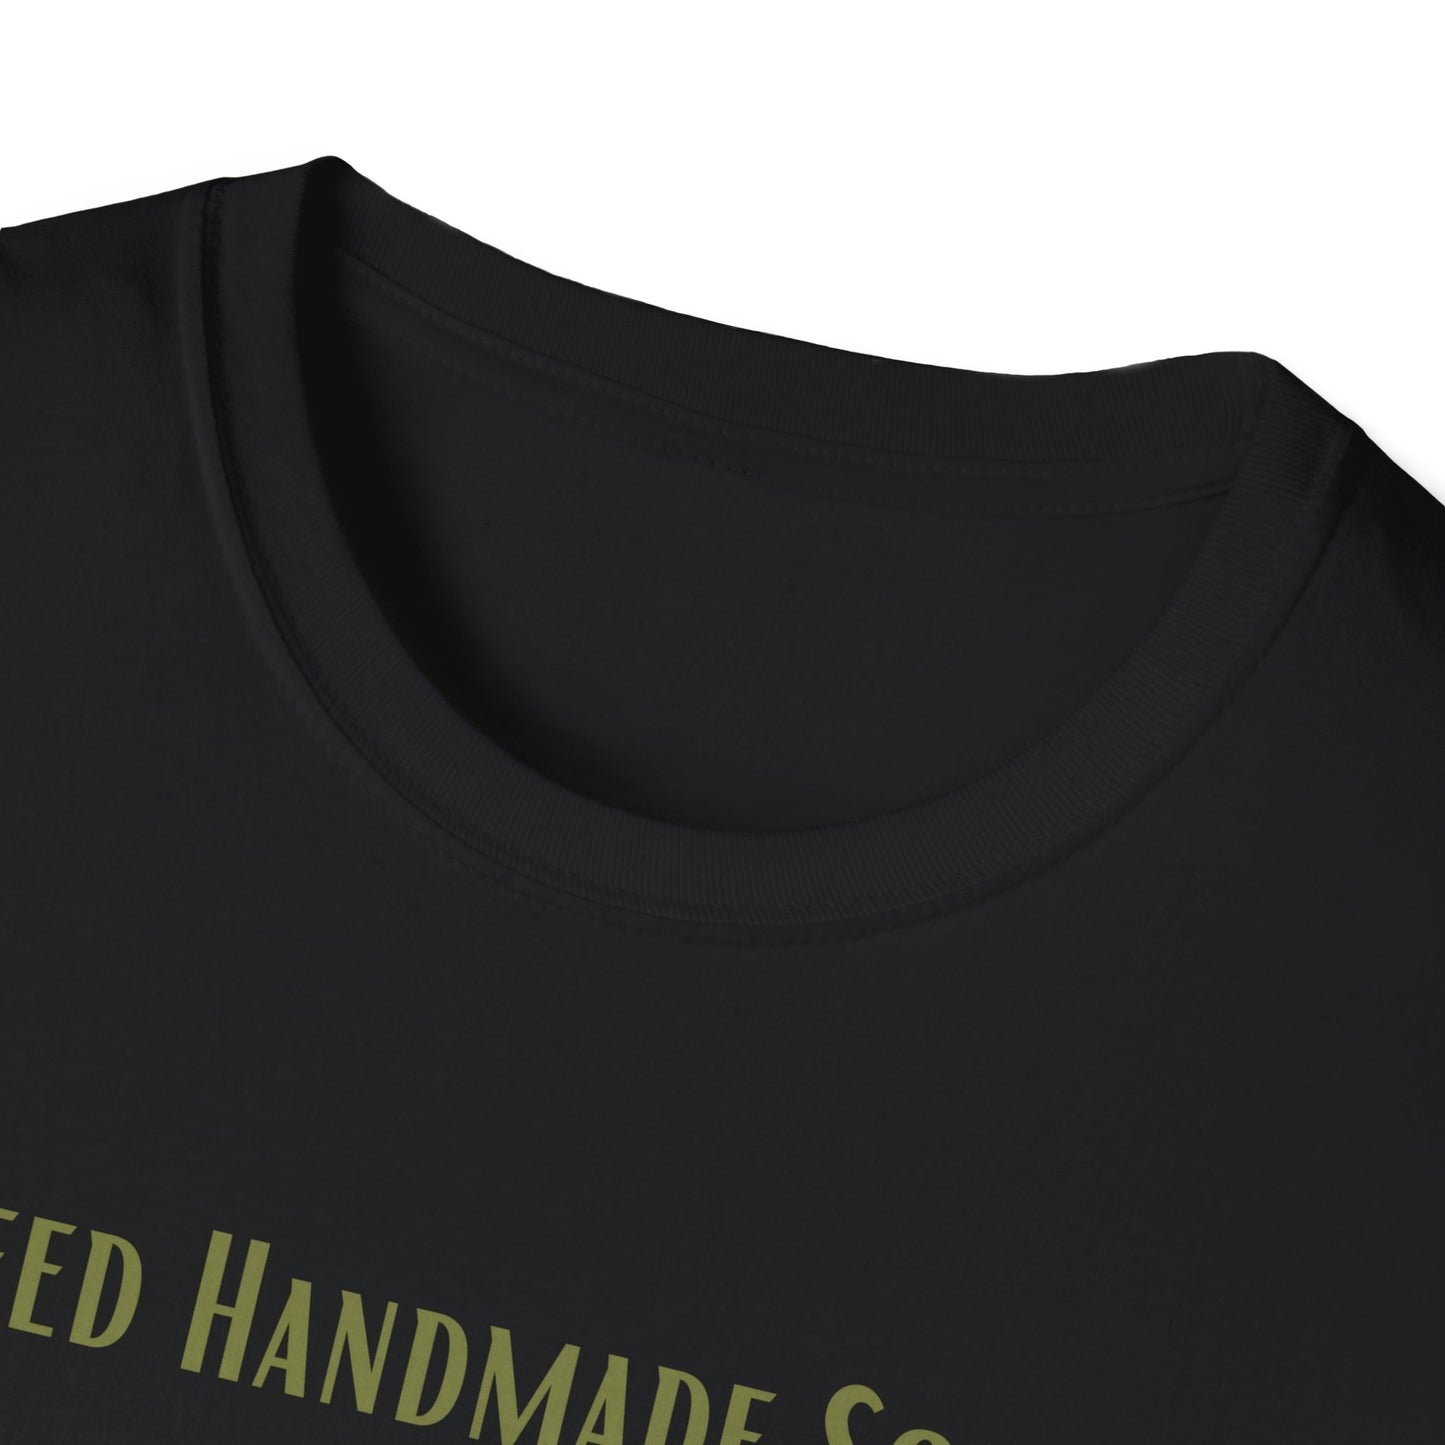 Need Handmade Soap? I'm Your Guy T-Shirt